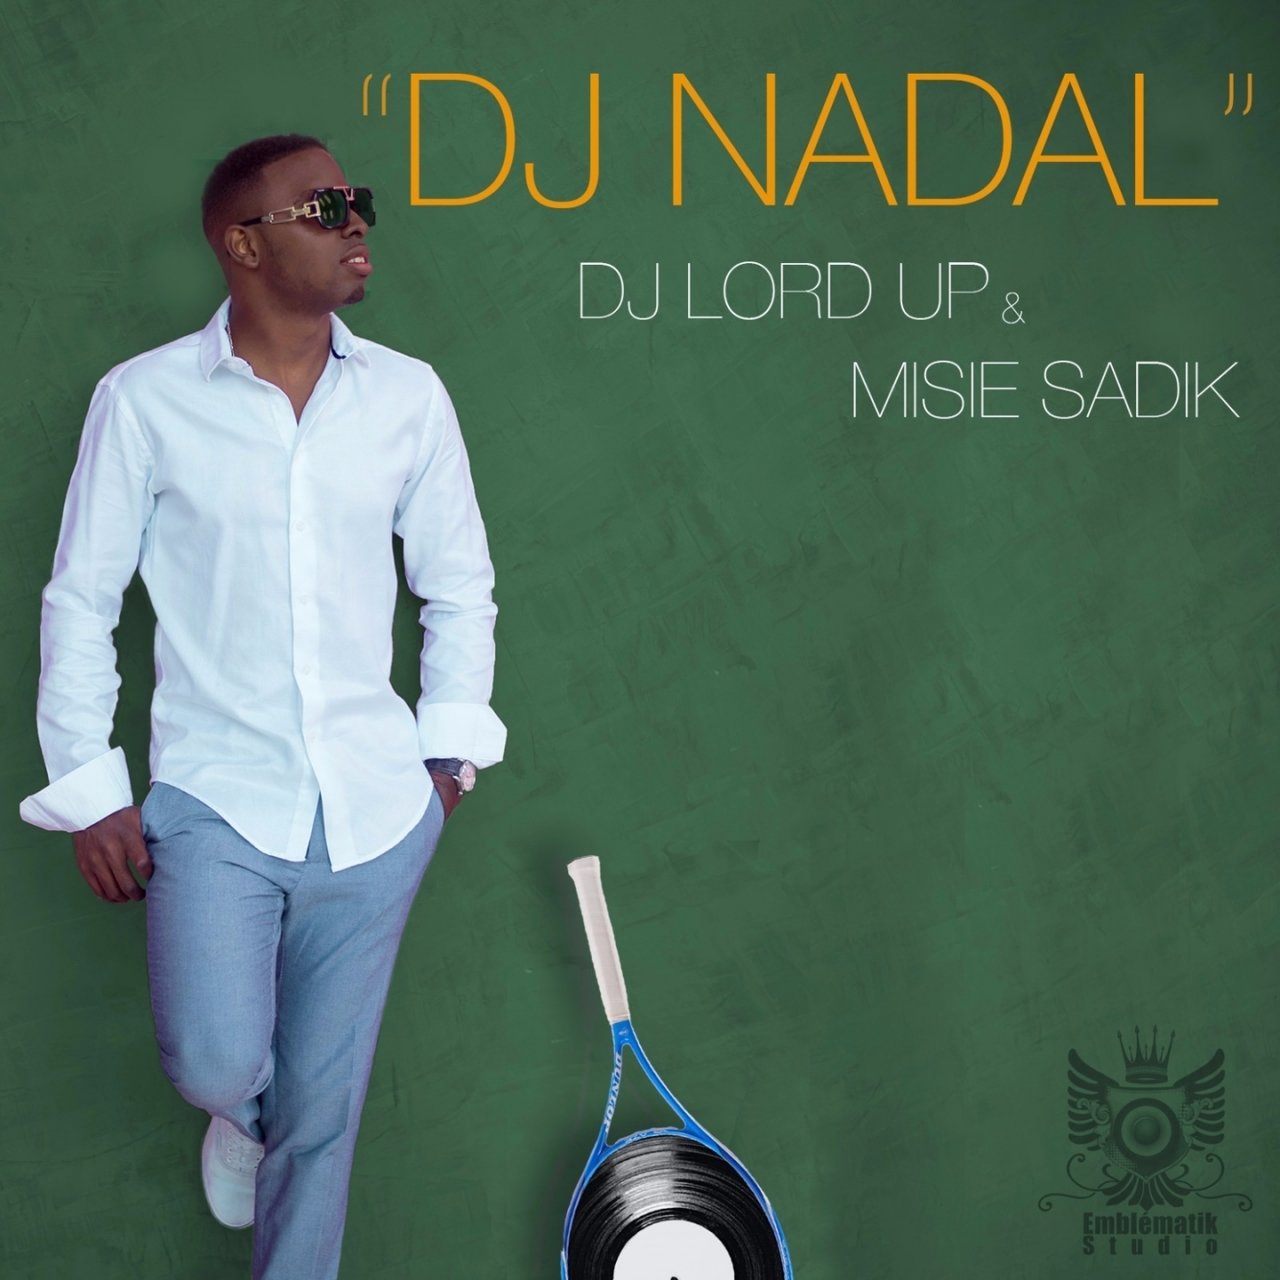 DJ Lord Up and Misié Sadik - DJ Nadal (Cover)